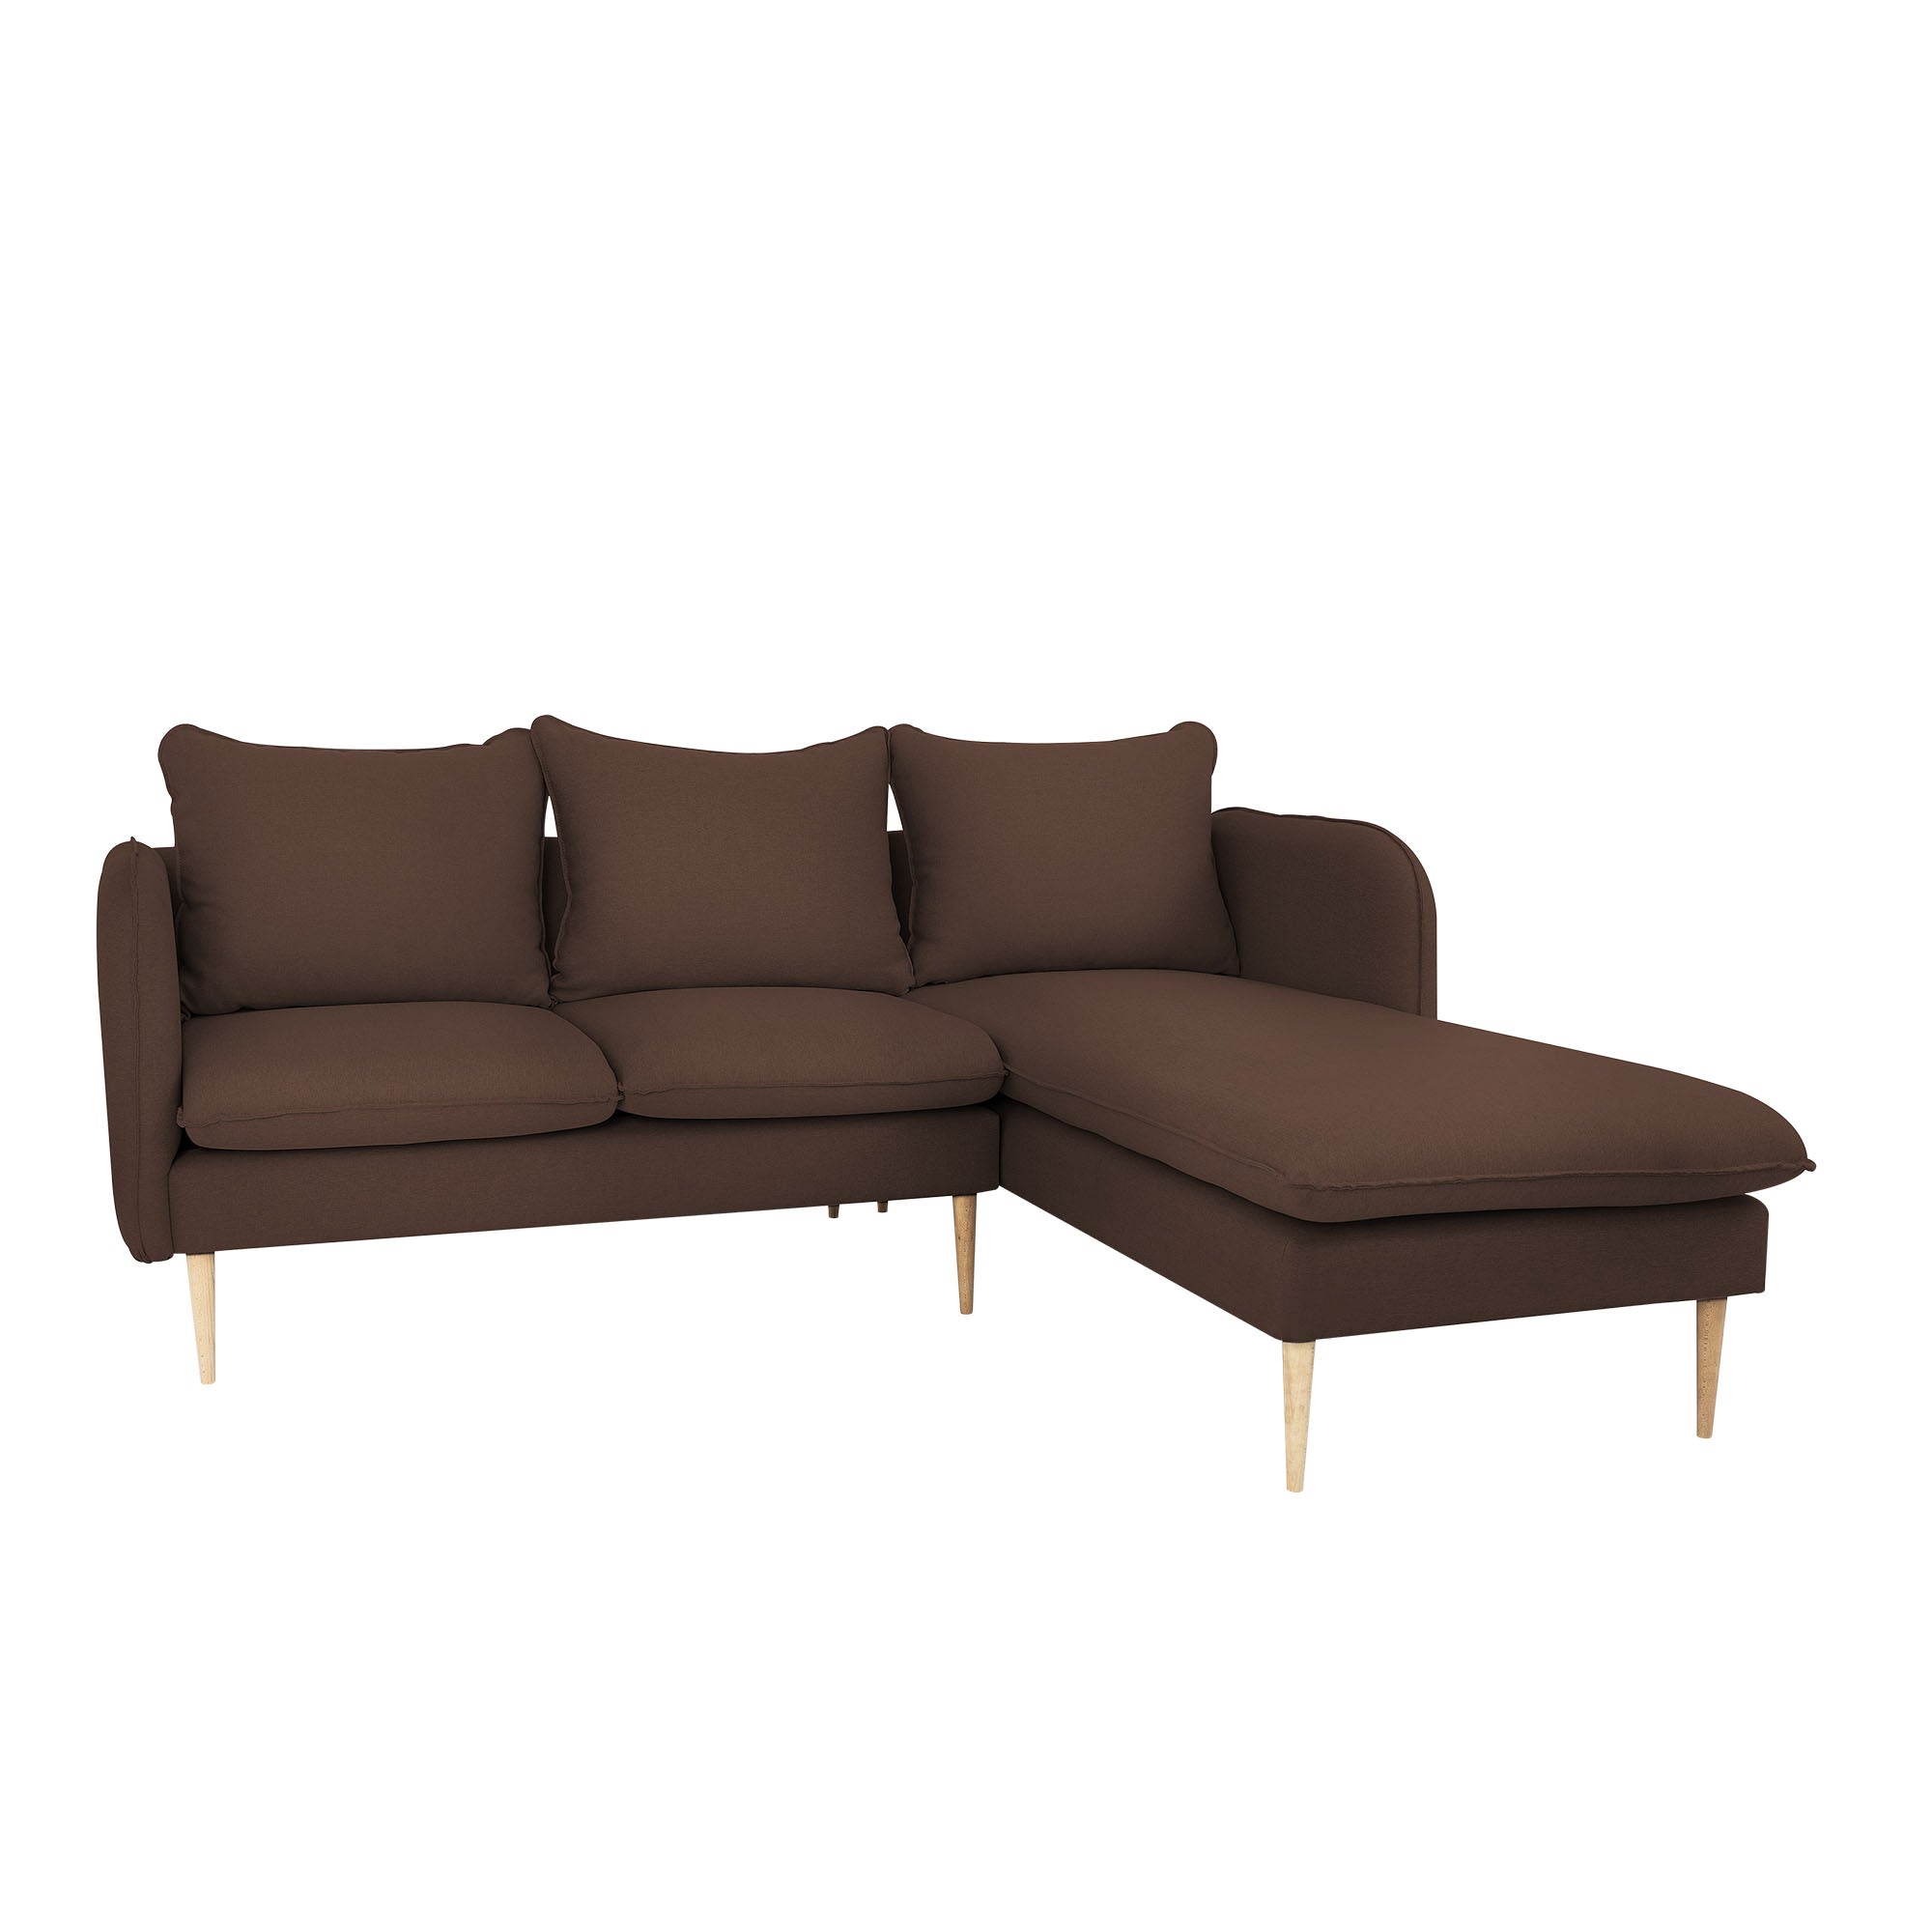 POSH WOOD Corner Sofa Right upholstery colour brown